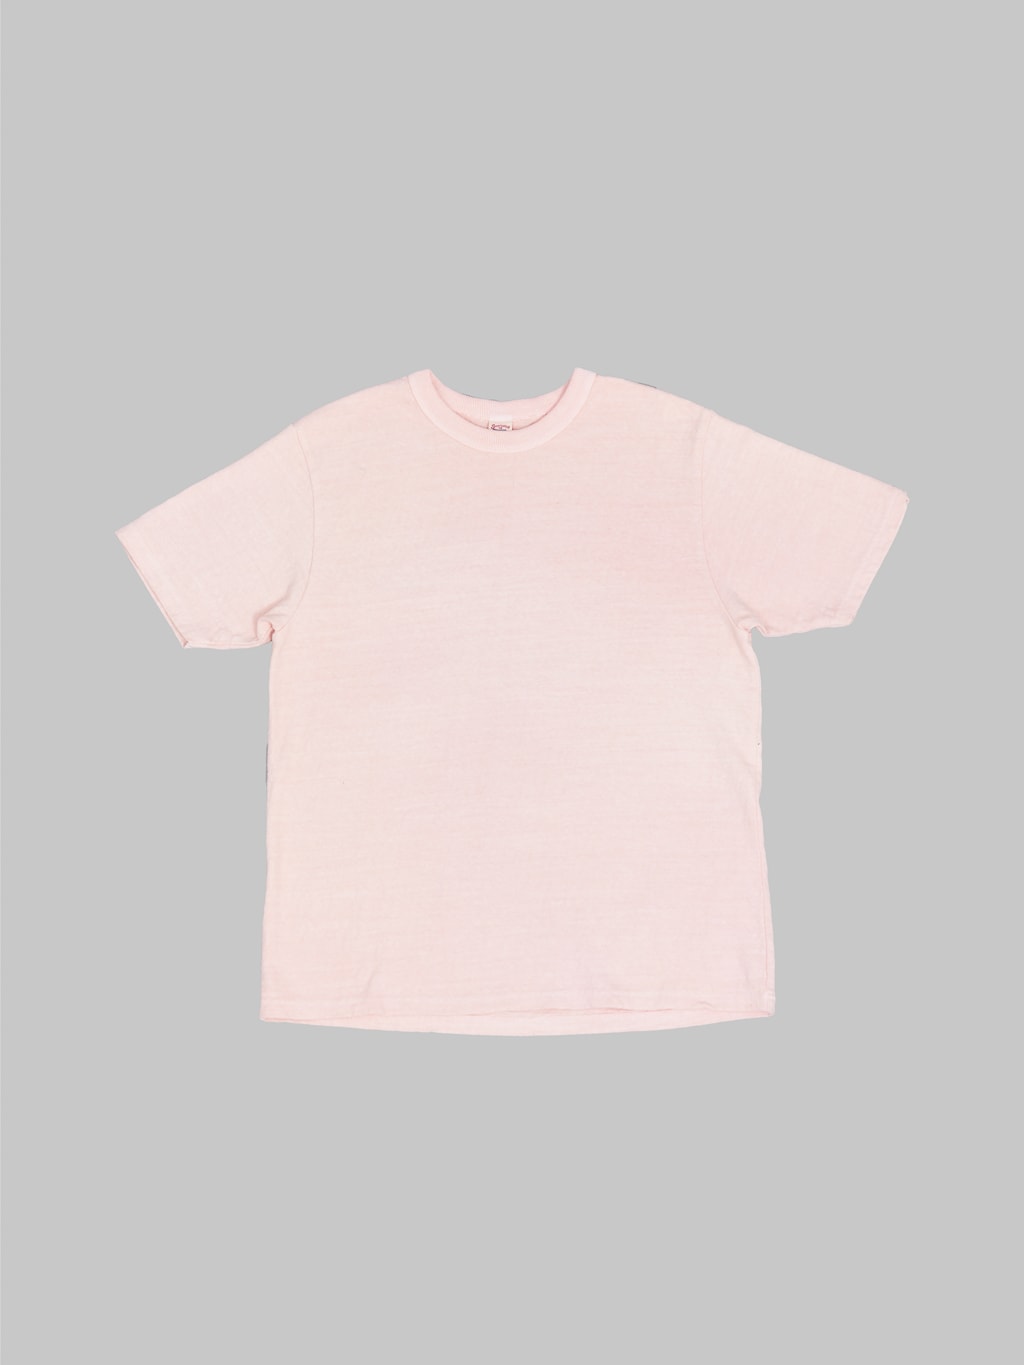 UES N8 Slub Nep Short Sleeve TShirt pink  front